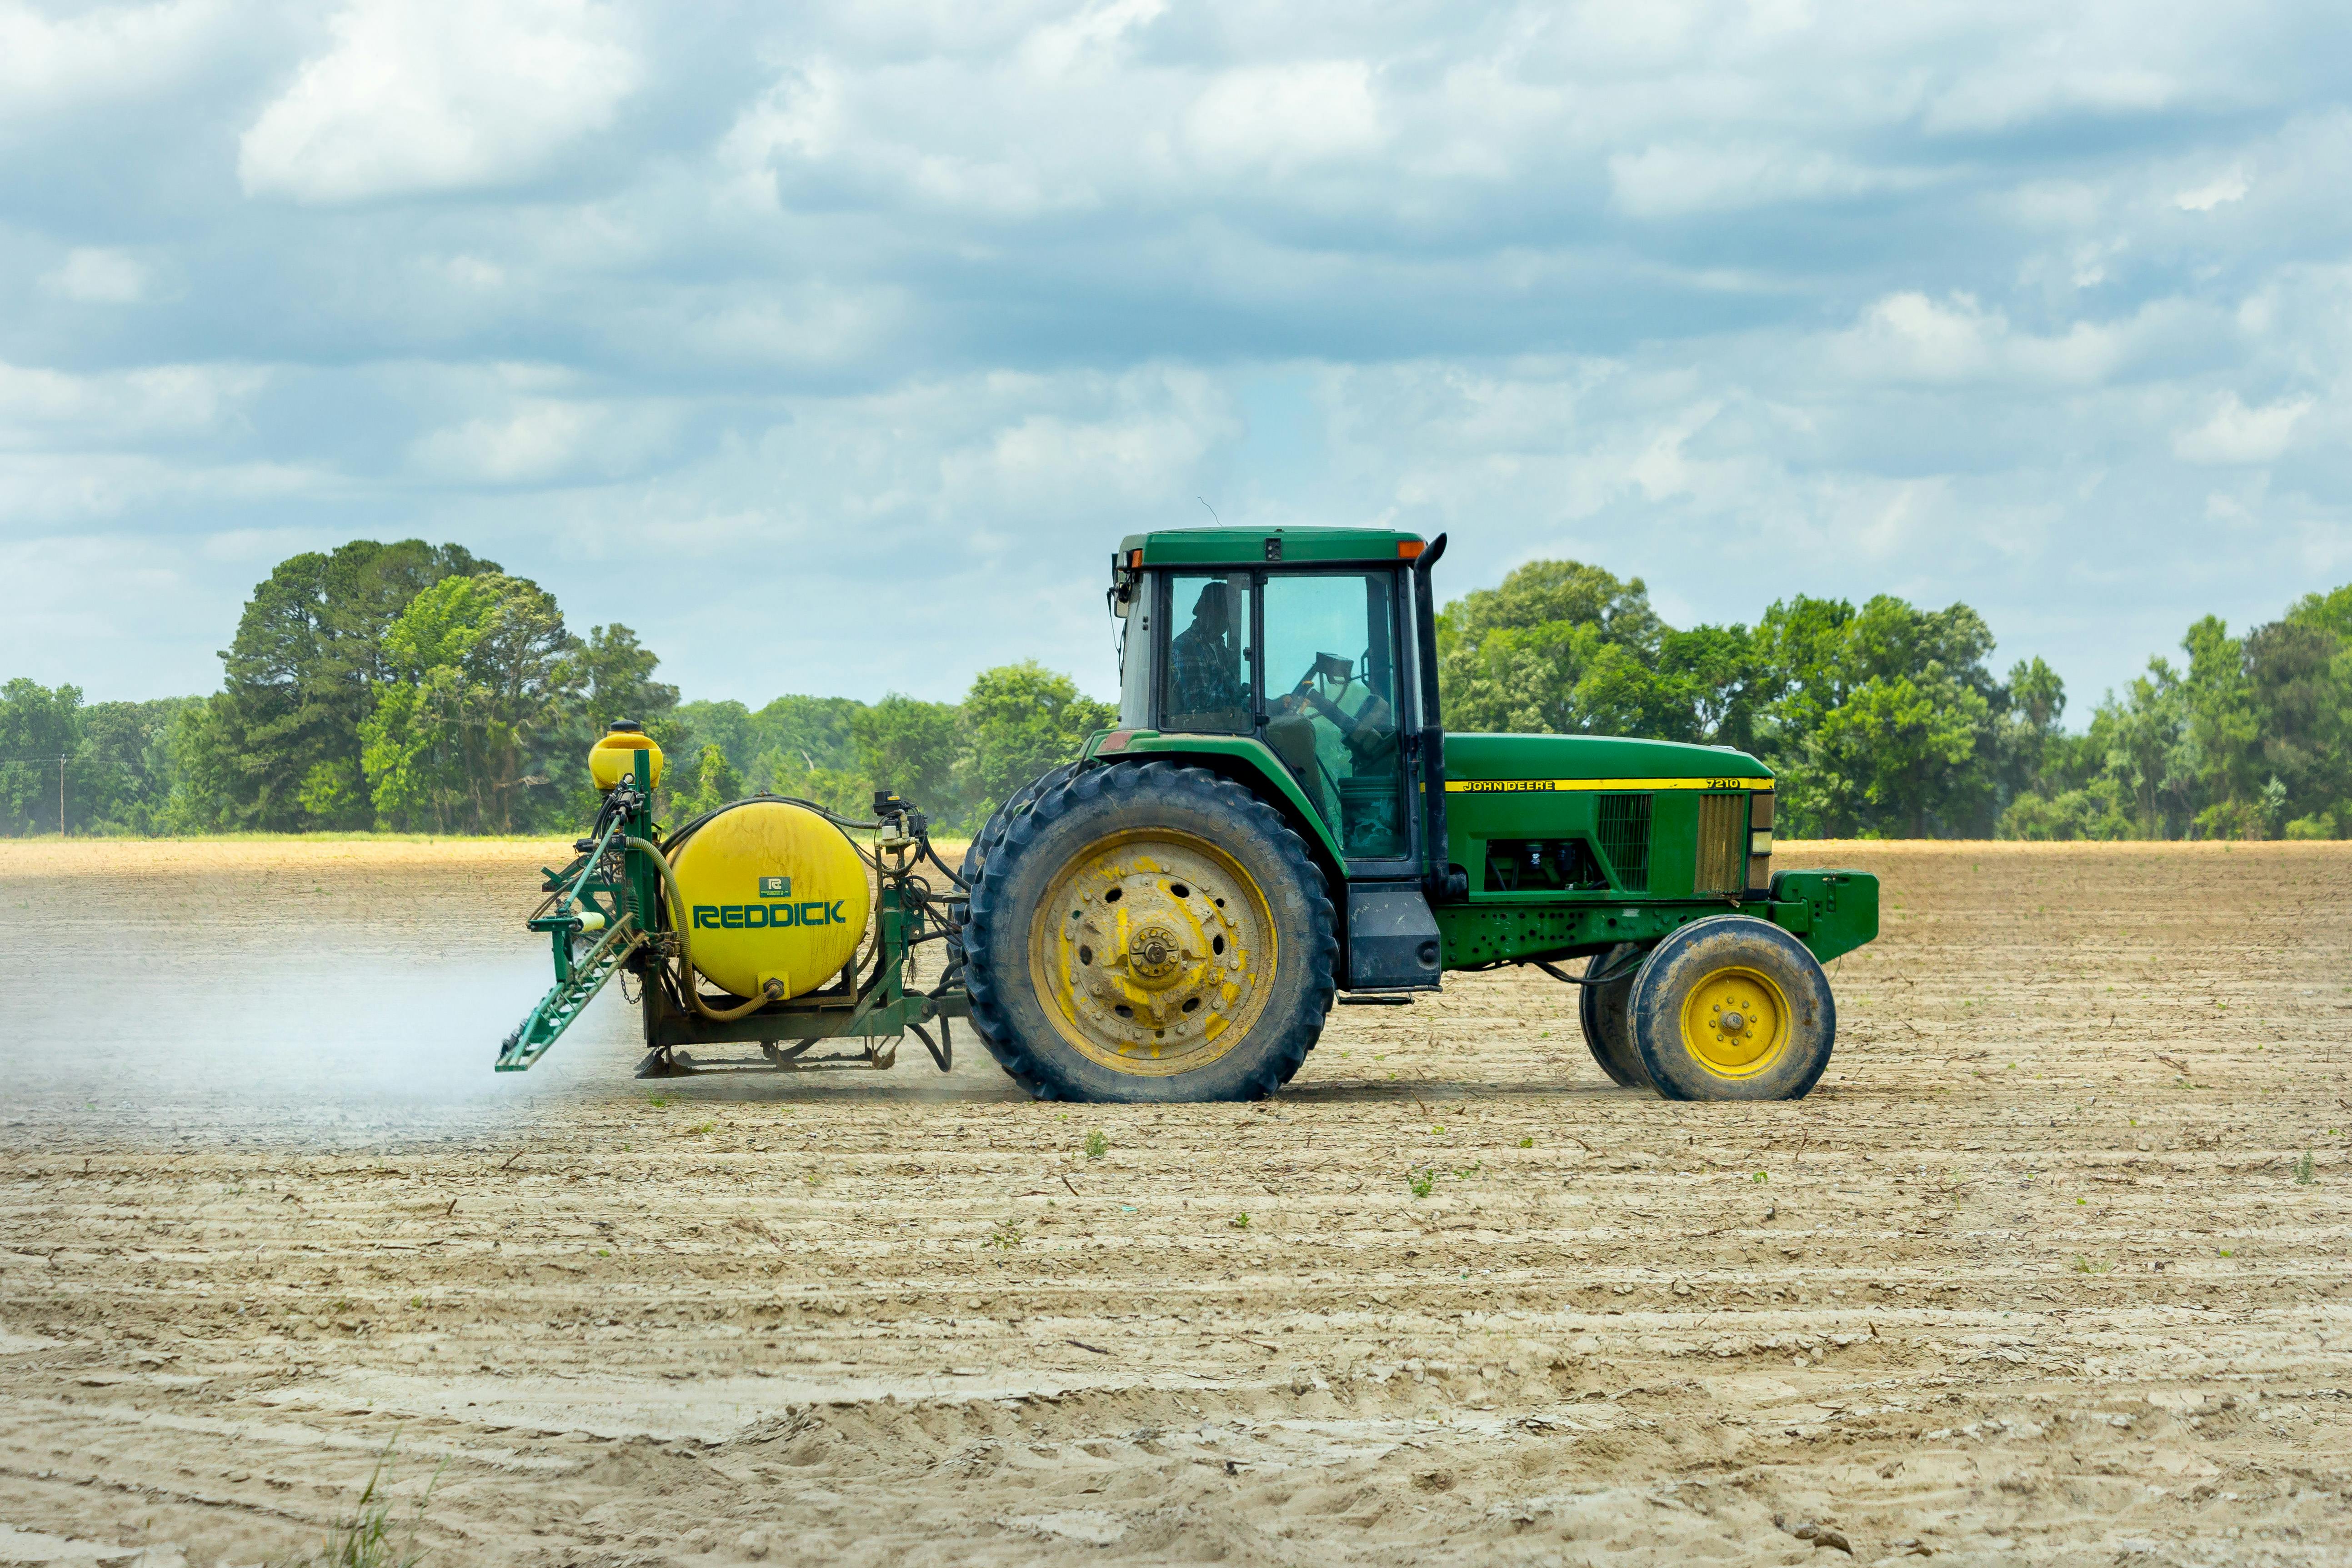 Tractor spraying a crop field